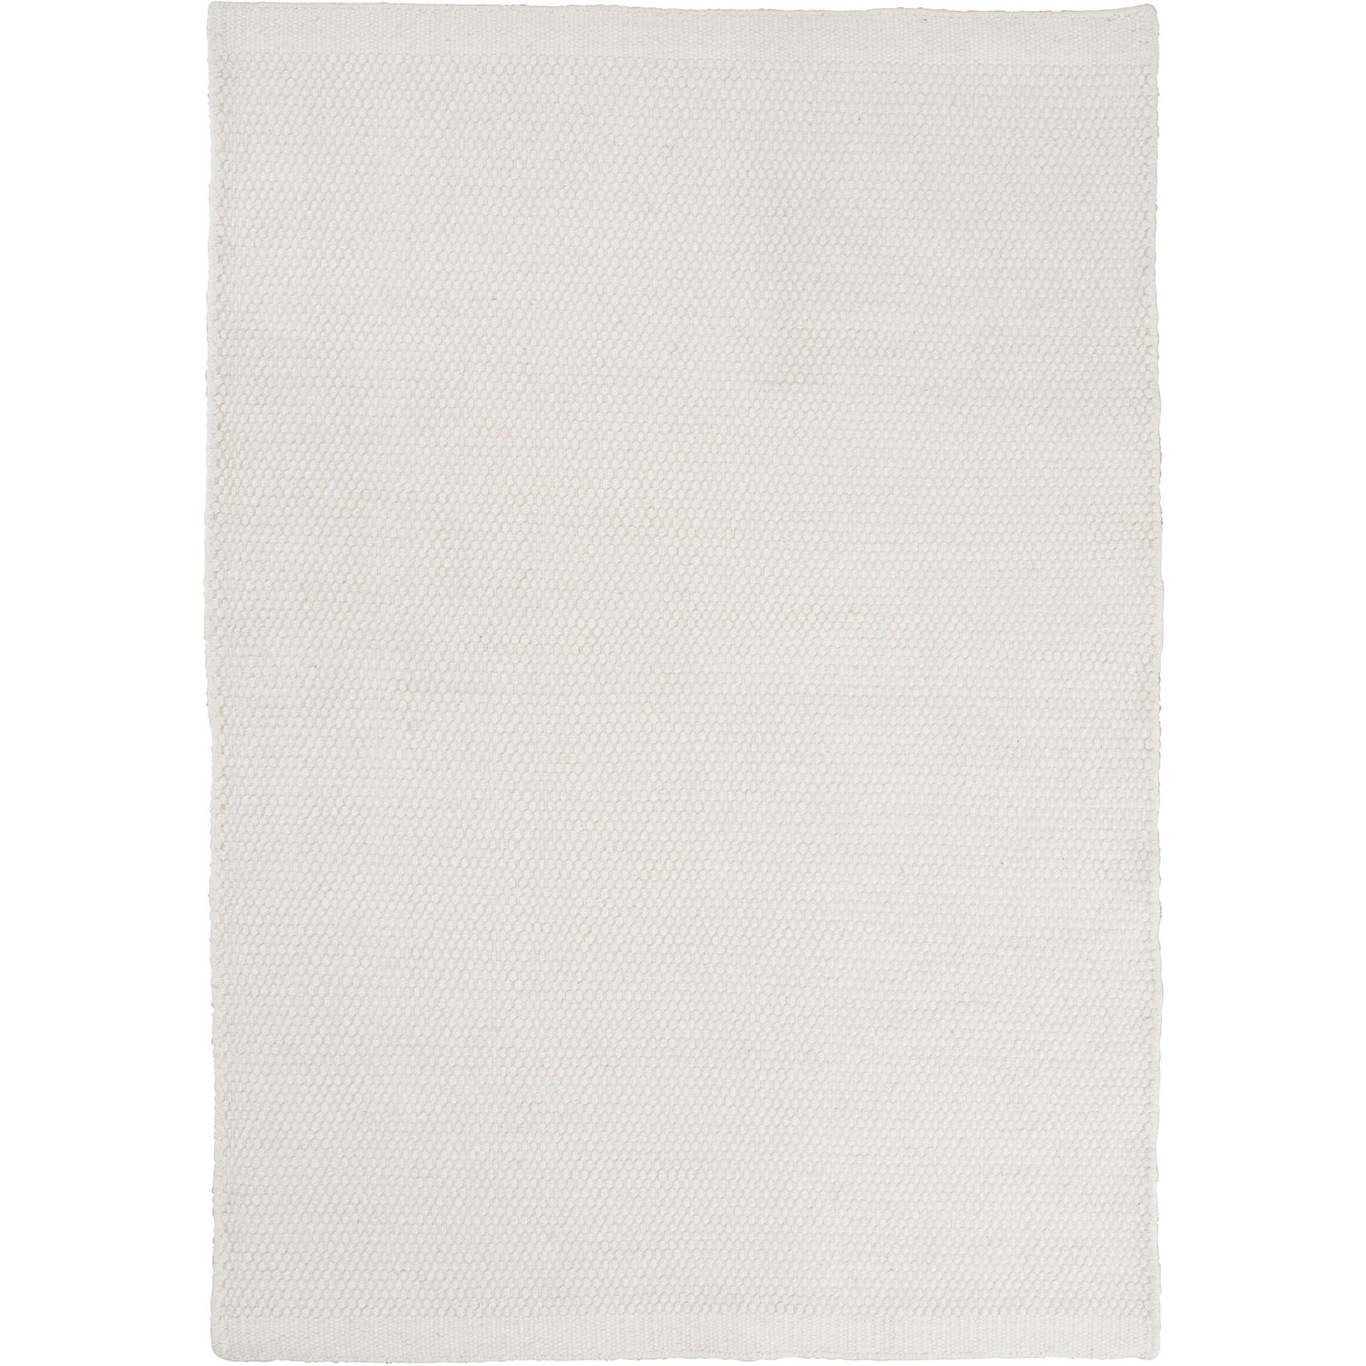 Asko Rug White, 200x300 cm